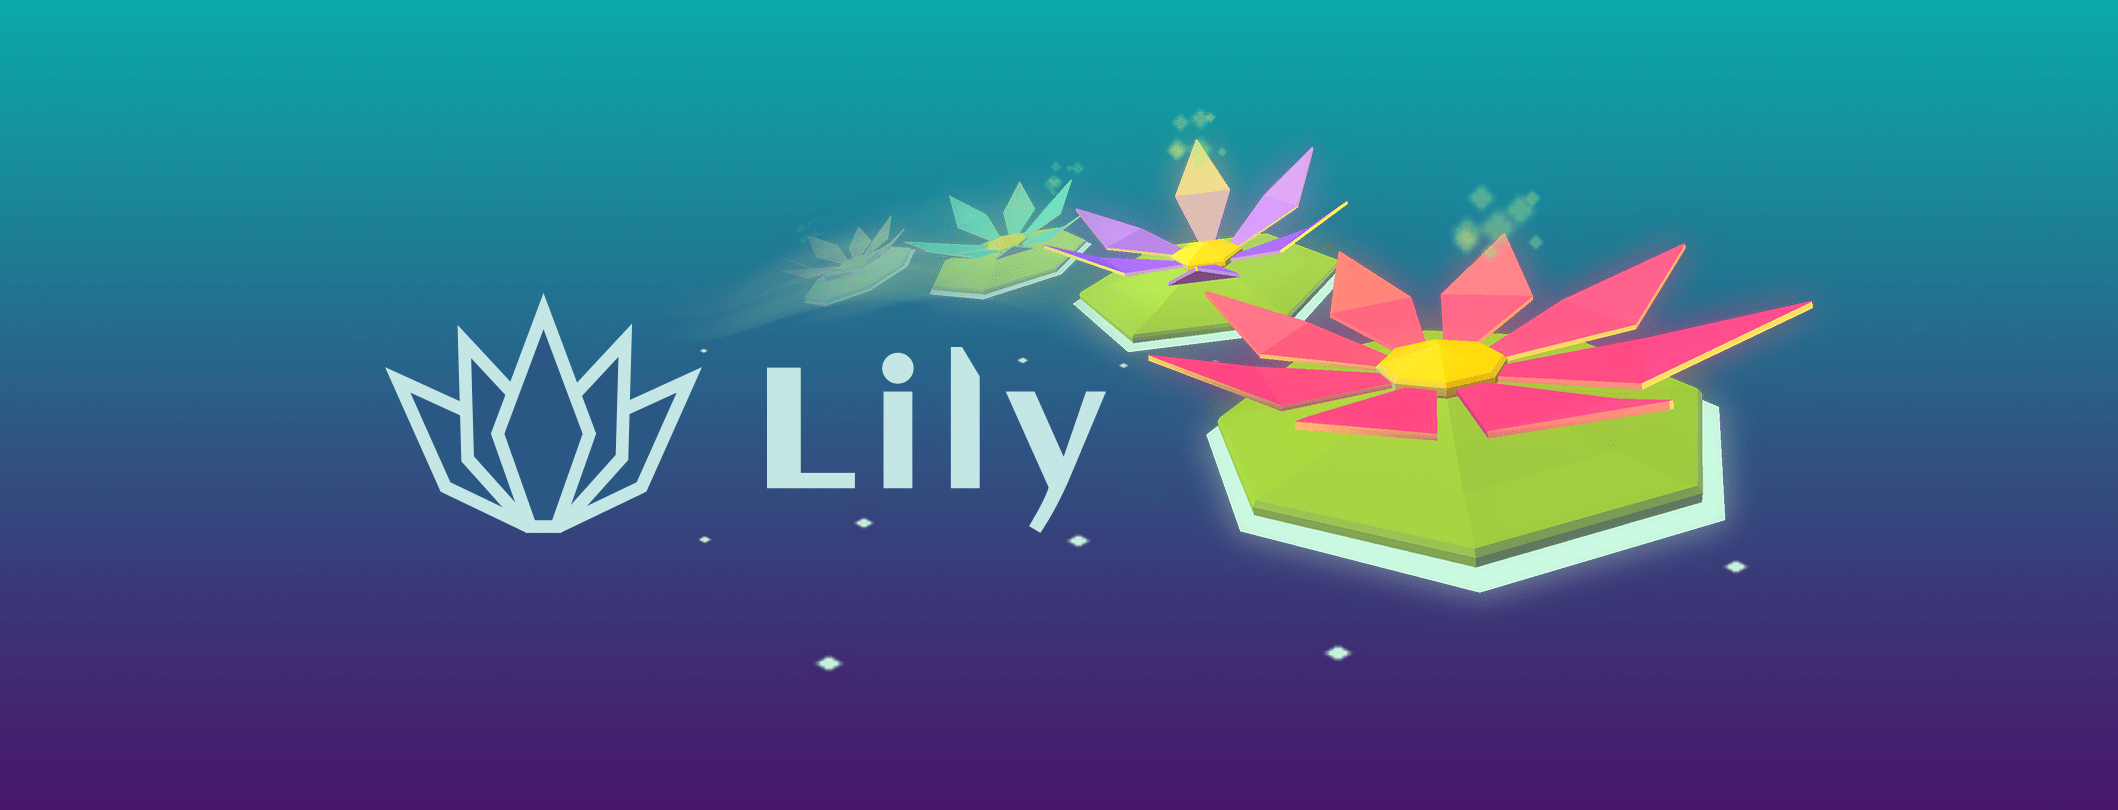 App Lily para iOS